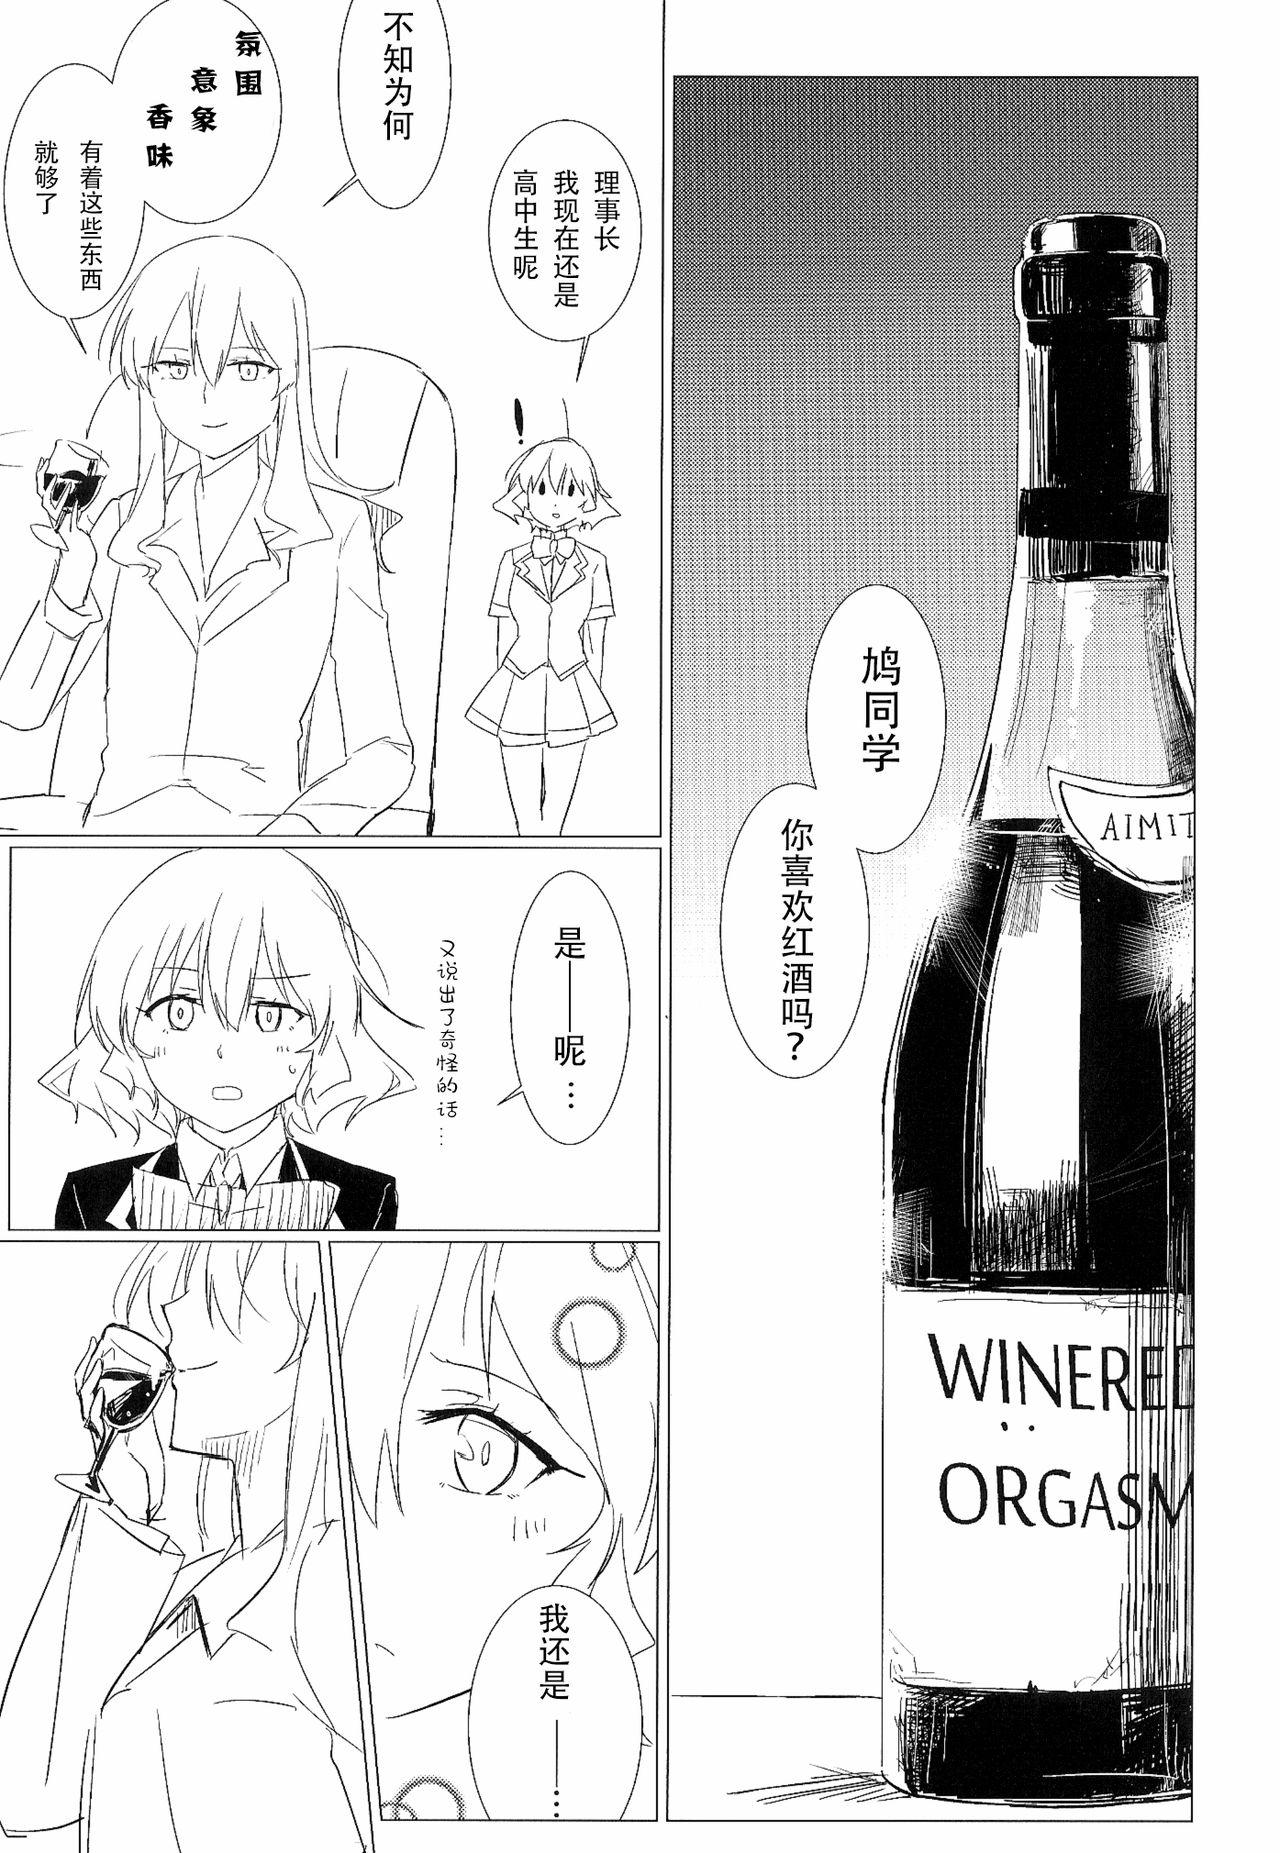 Messy Wine Red Orgasm - Akuma no riddle Mamando - Page 4